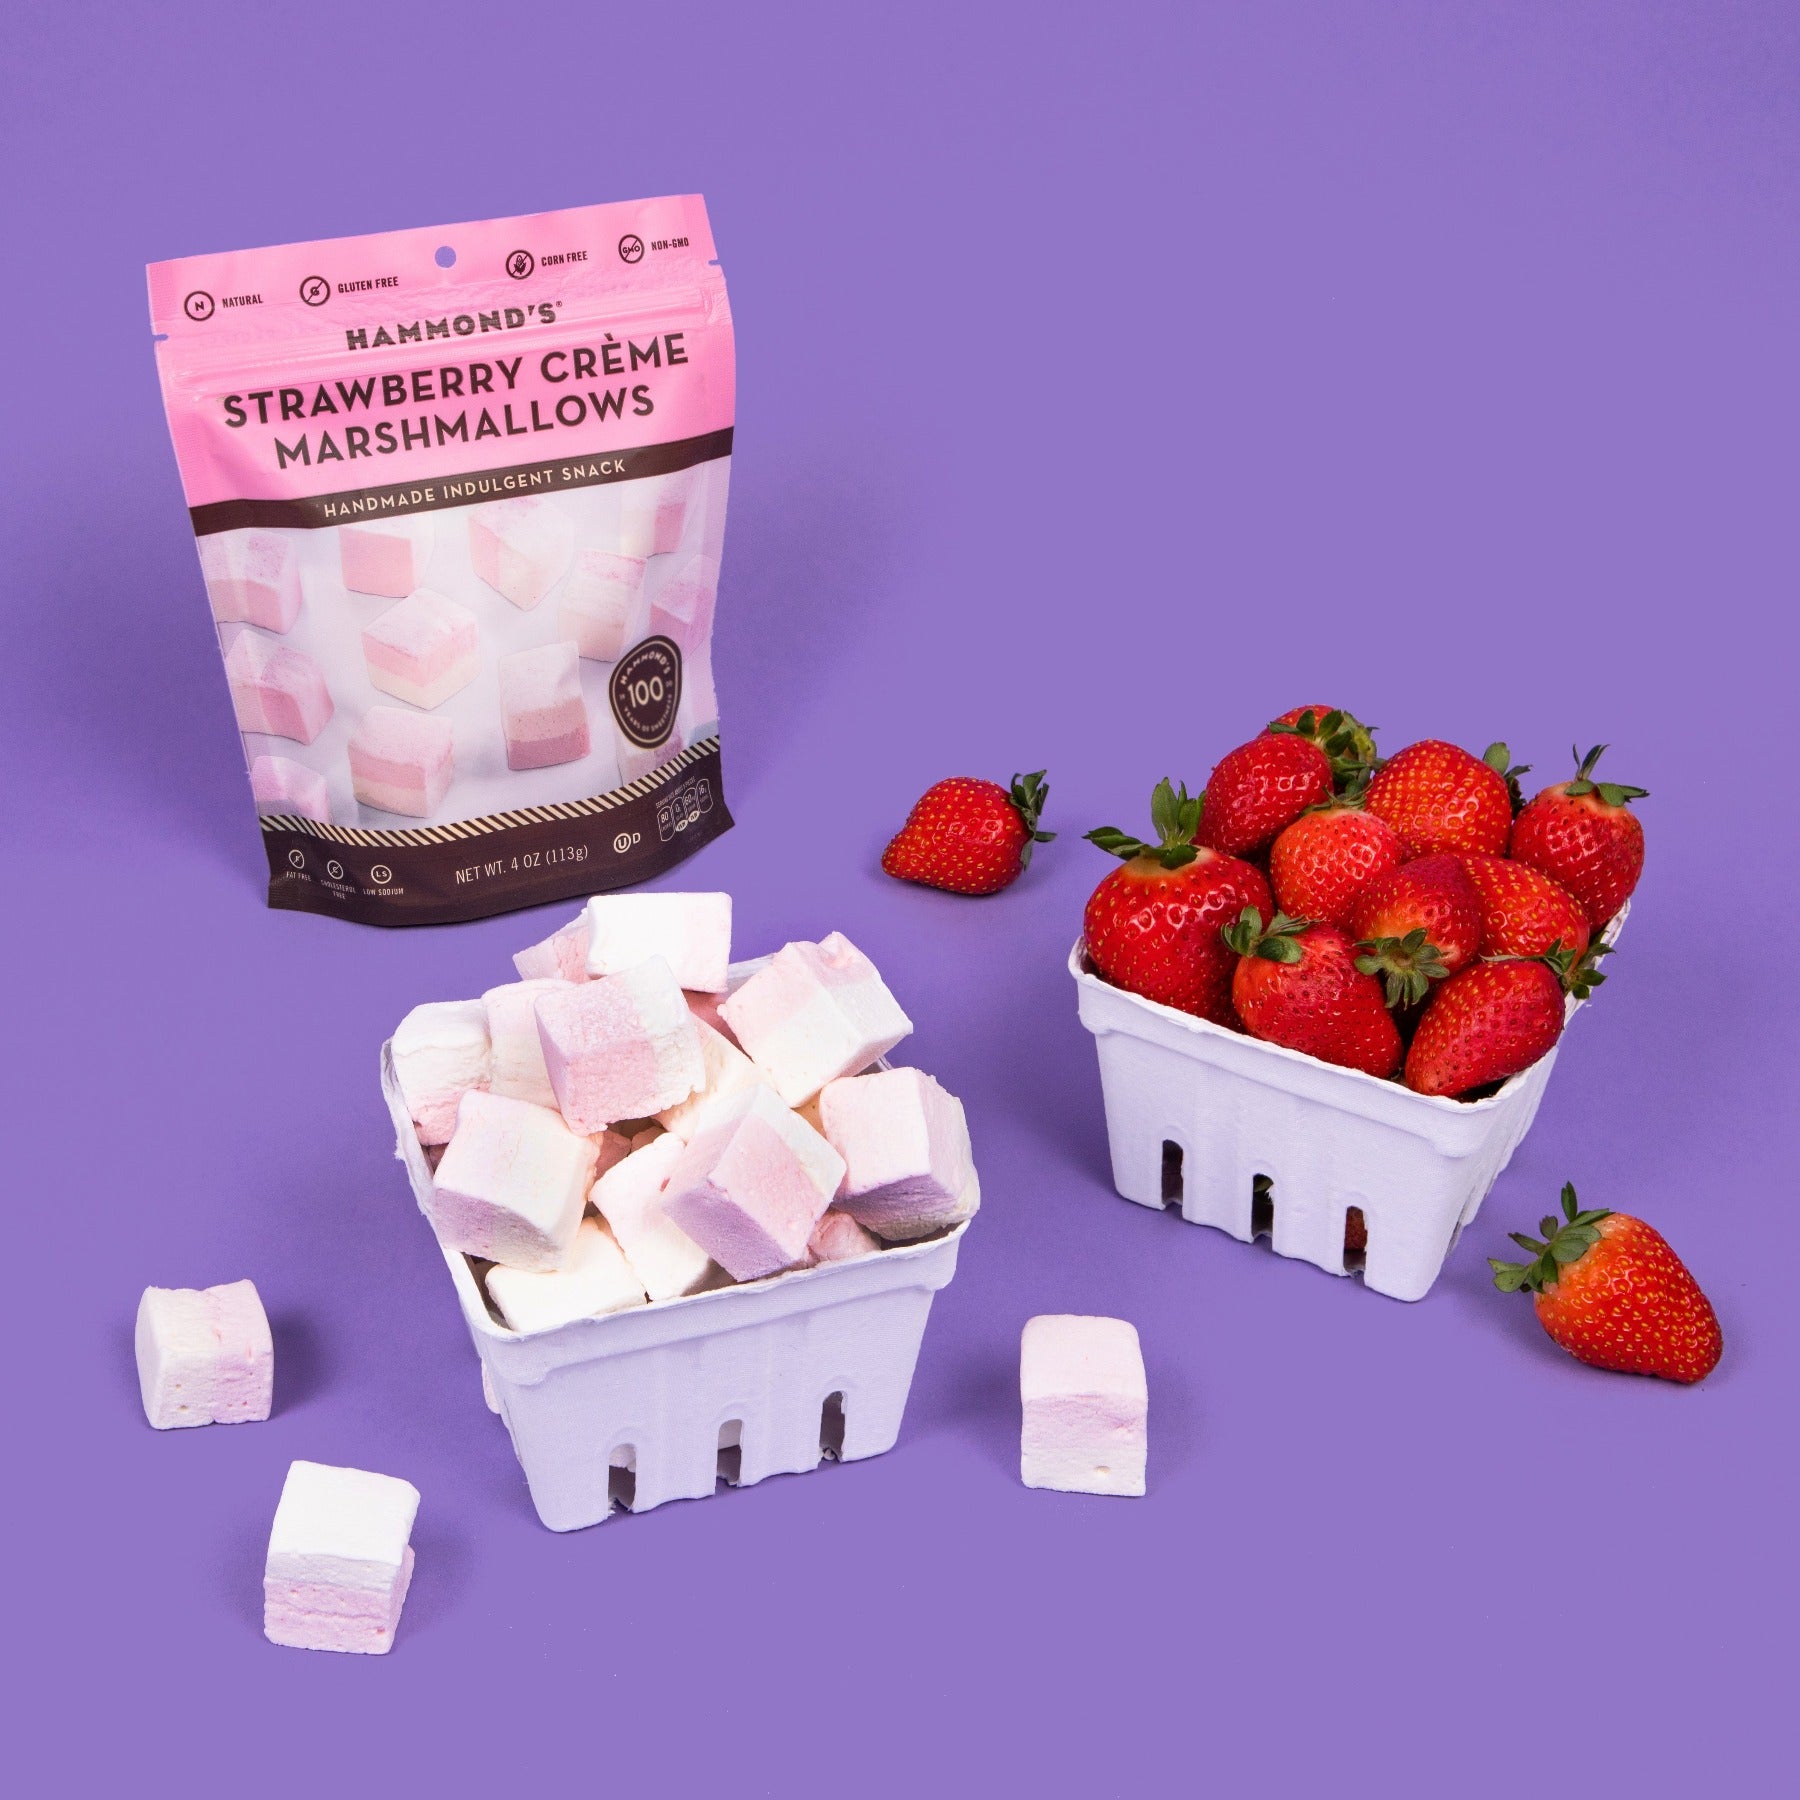 Strawberry Creme Marshmallows Glamour Shot